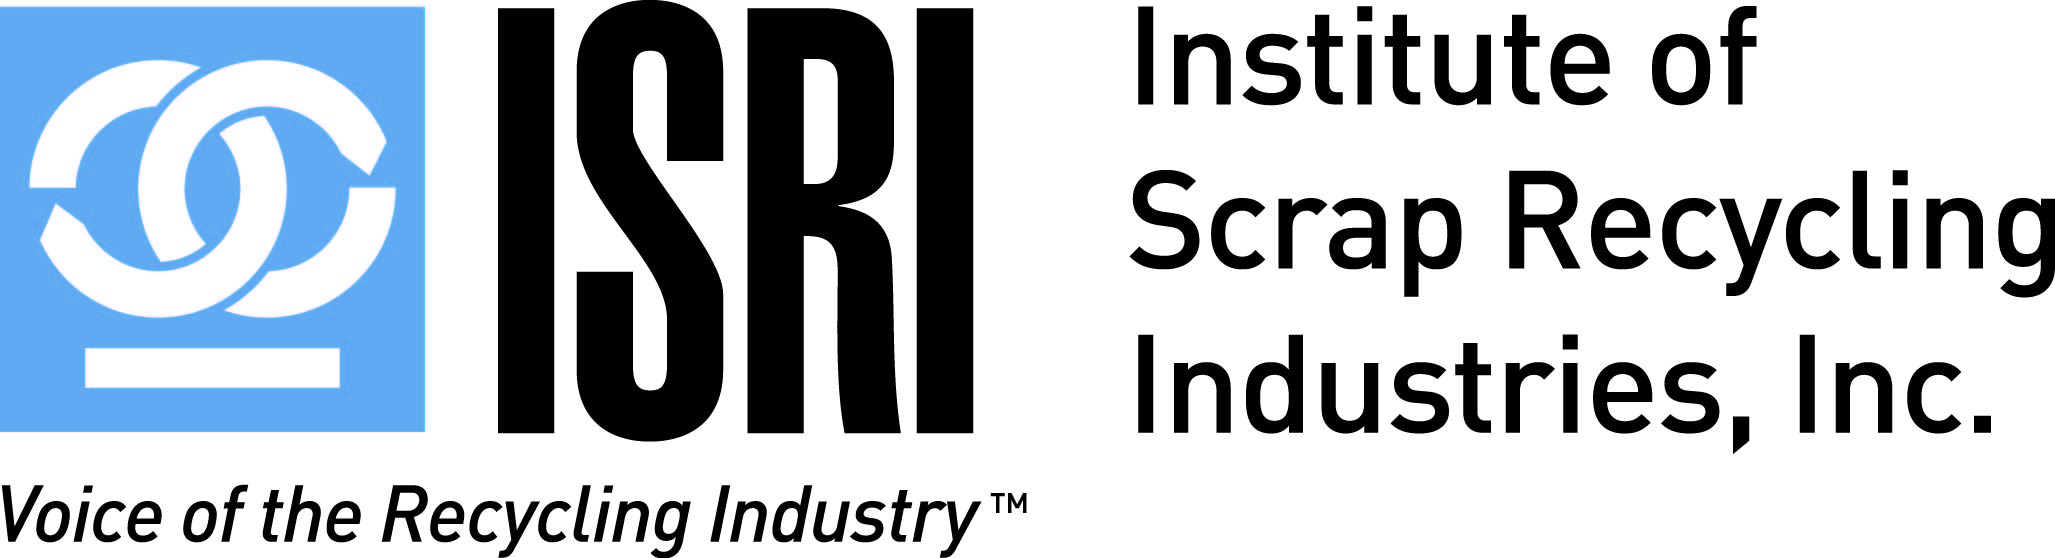 Institute of Scrap Recycling Industries logo